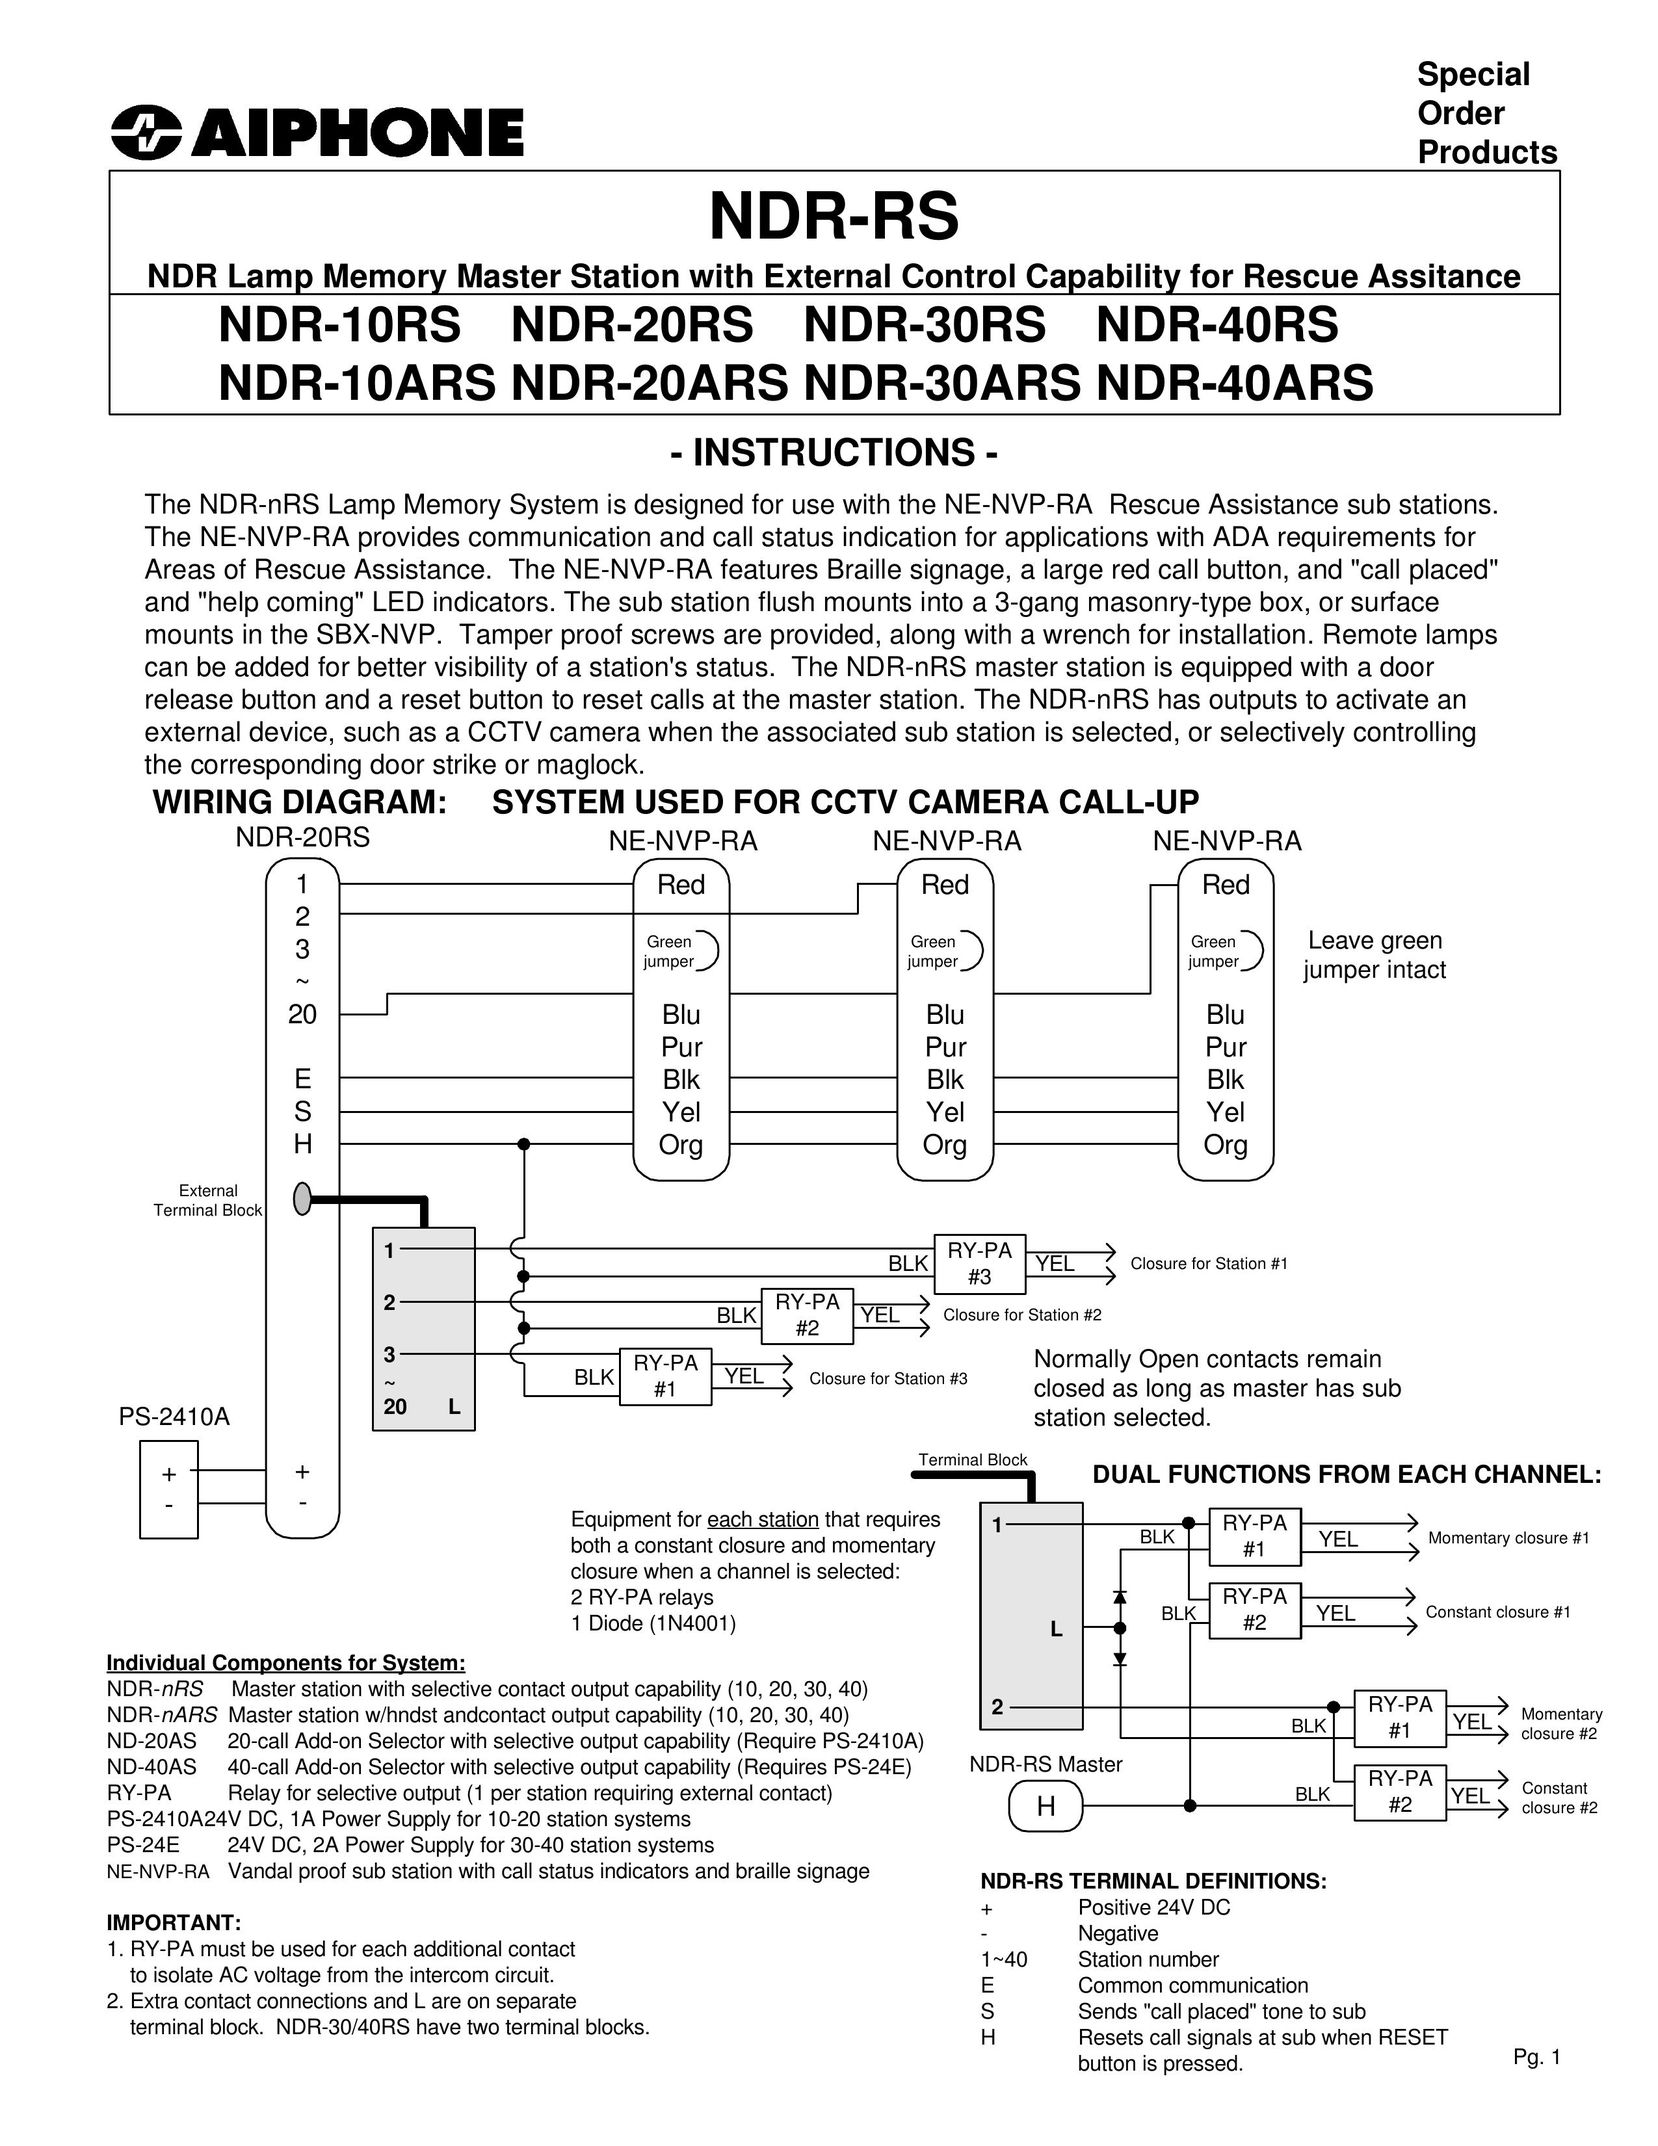 Aiphone ND-20AS Telephone User Manual